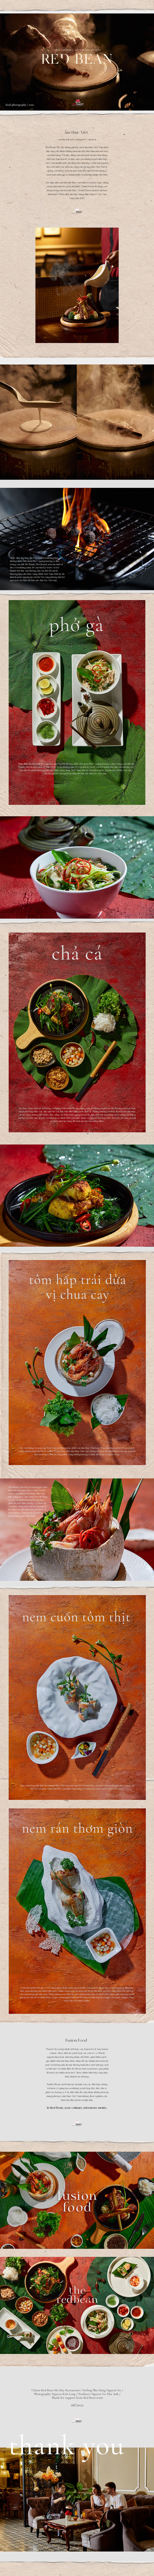 bun cha food photography Indochina indochine indochine style ingredients pho traditional vietnam vietnamese food